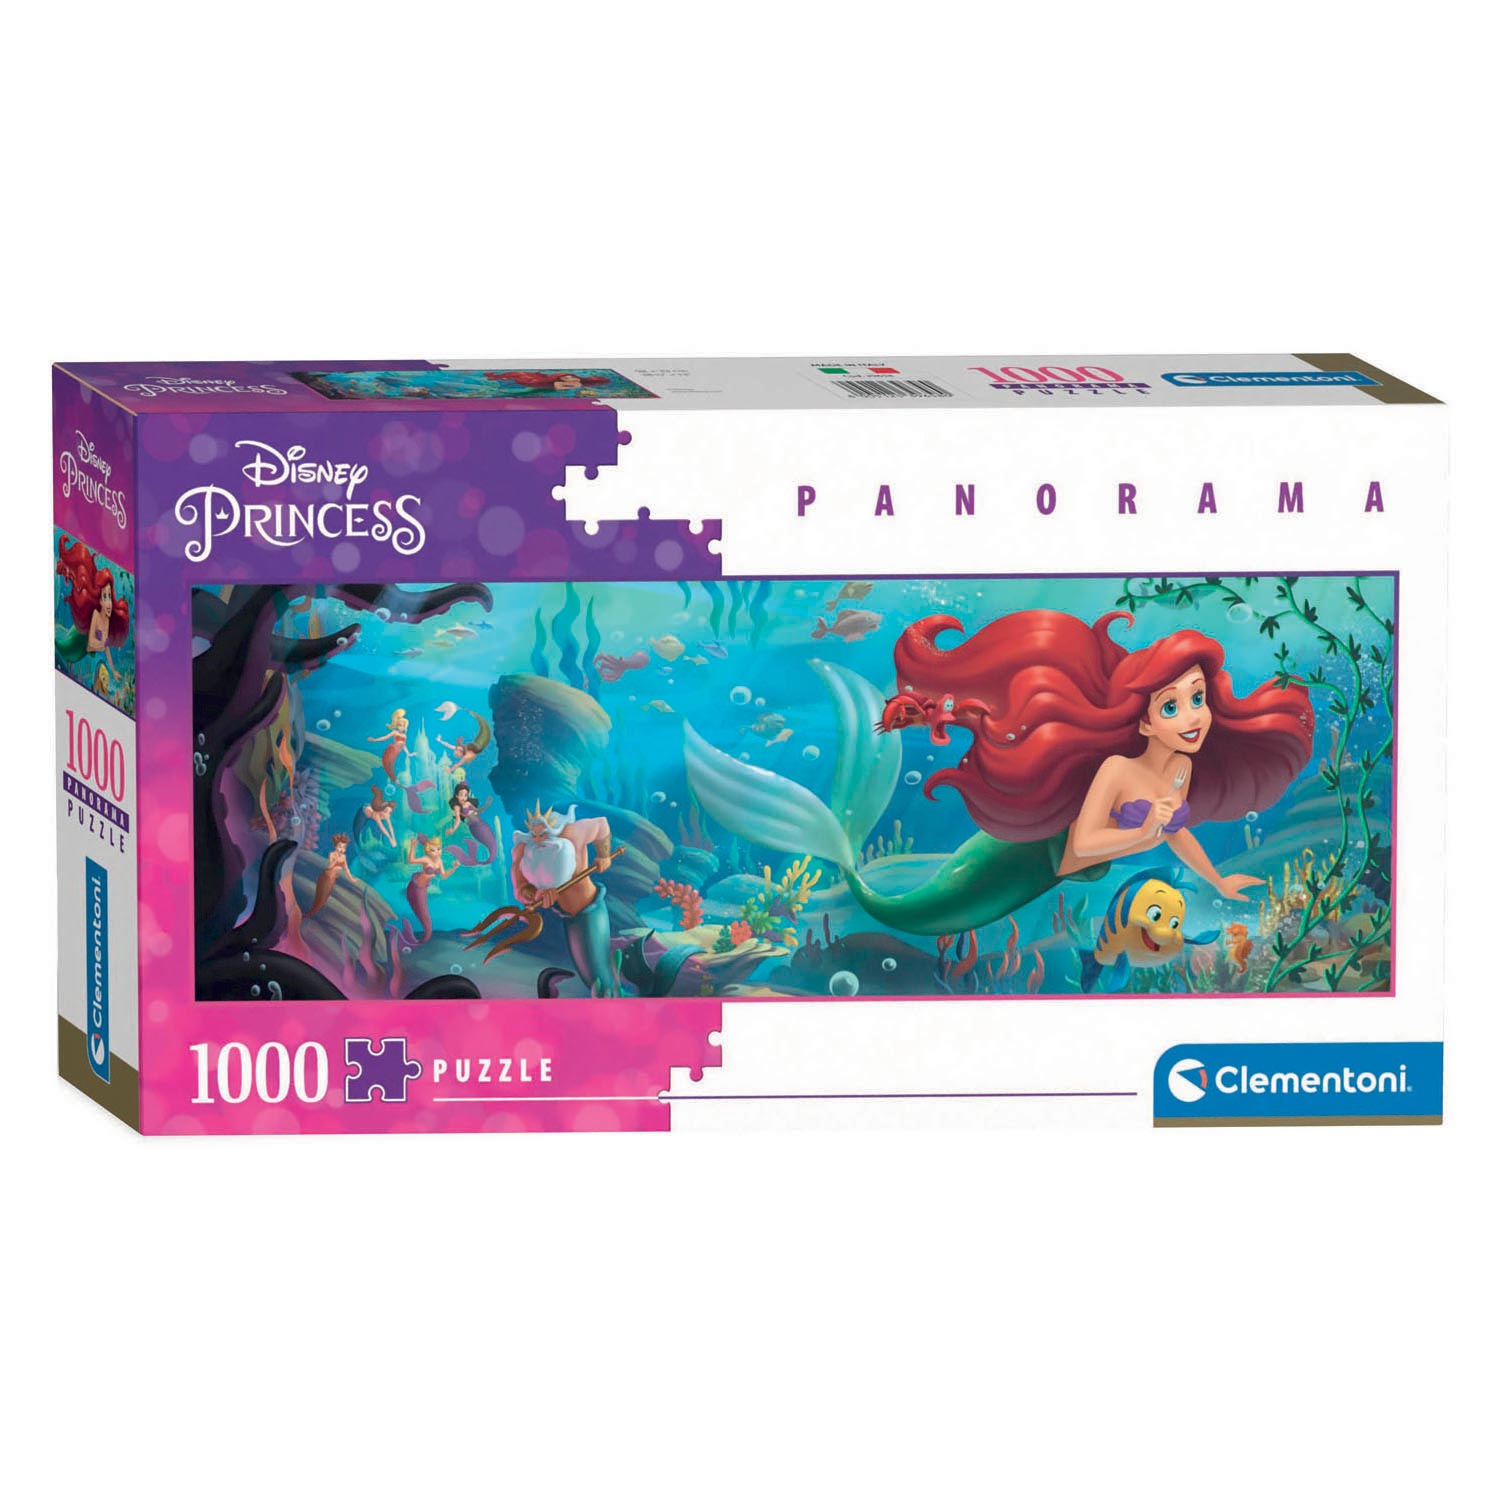 Clementoni - Panorama Puzzle 1000 pcs - Disney Princess (39658) - Leker